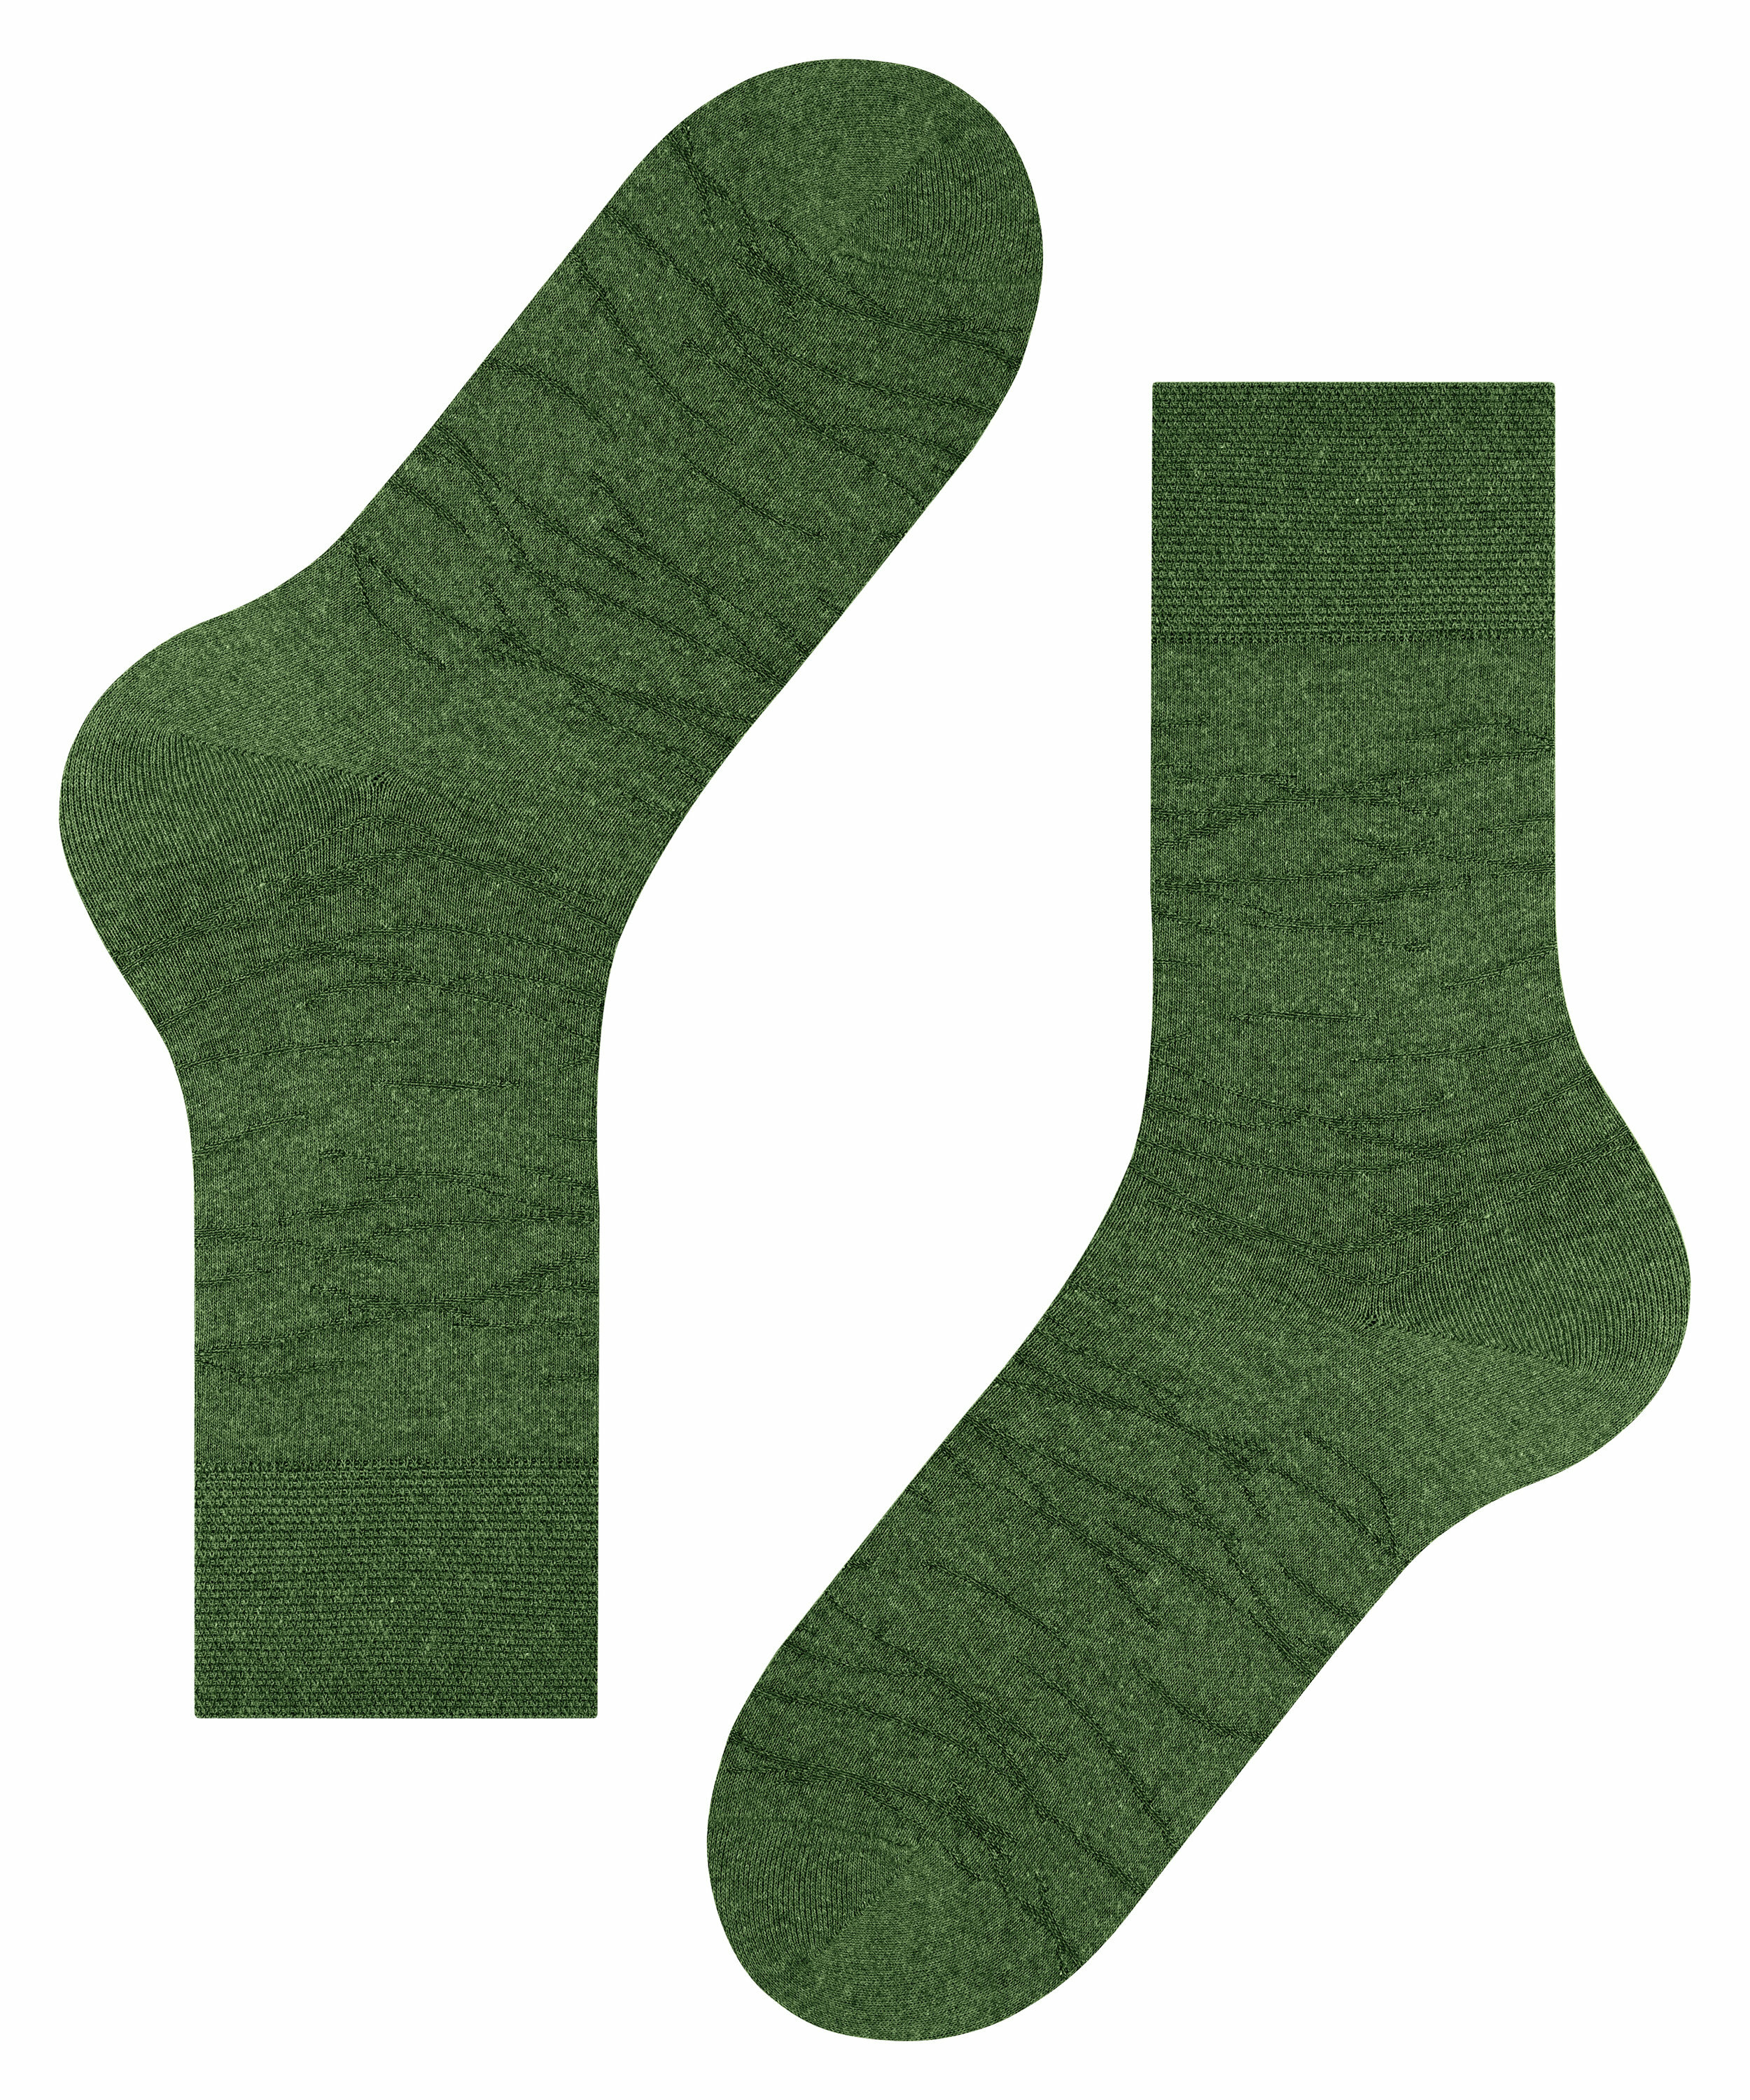 Baumwoll-Socke "Sensitive Plant Soft" aus Recycling-Material ohne Gummidruck